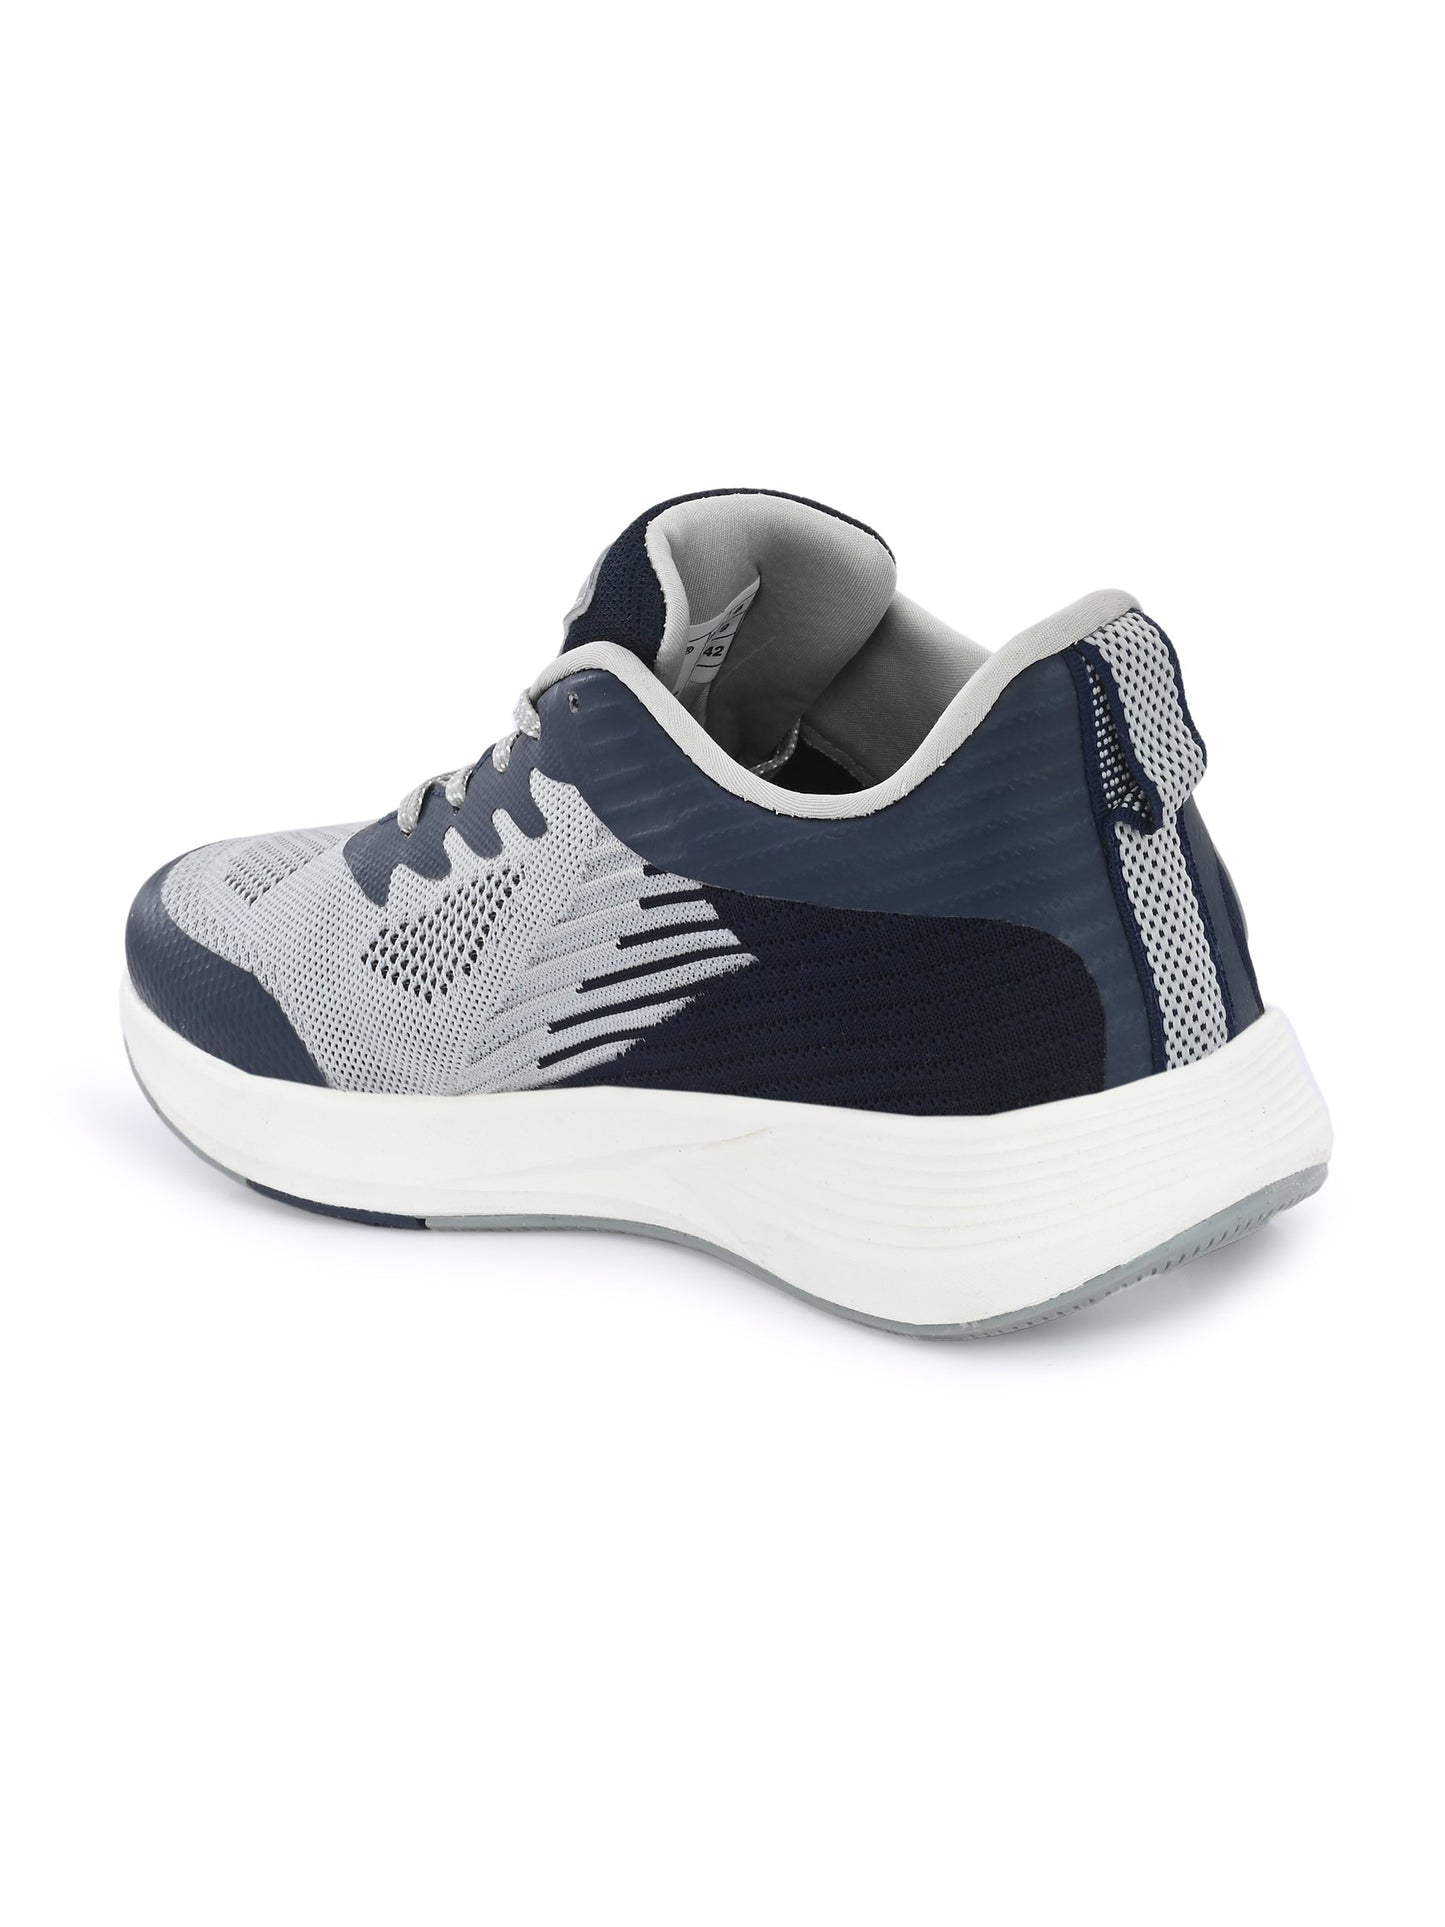 Hirolas® Men's Grey/Blue Elite Shock Absorbing Walking Running Fitness Athletic Training Gym Fashion Sneaker Sport Shoes (HRLMP01GRY)